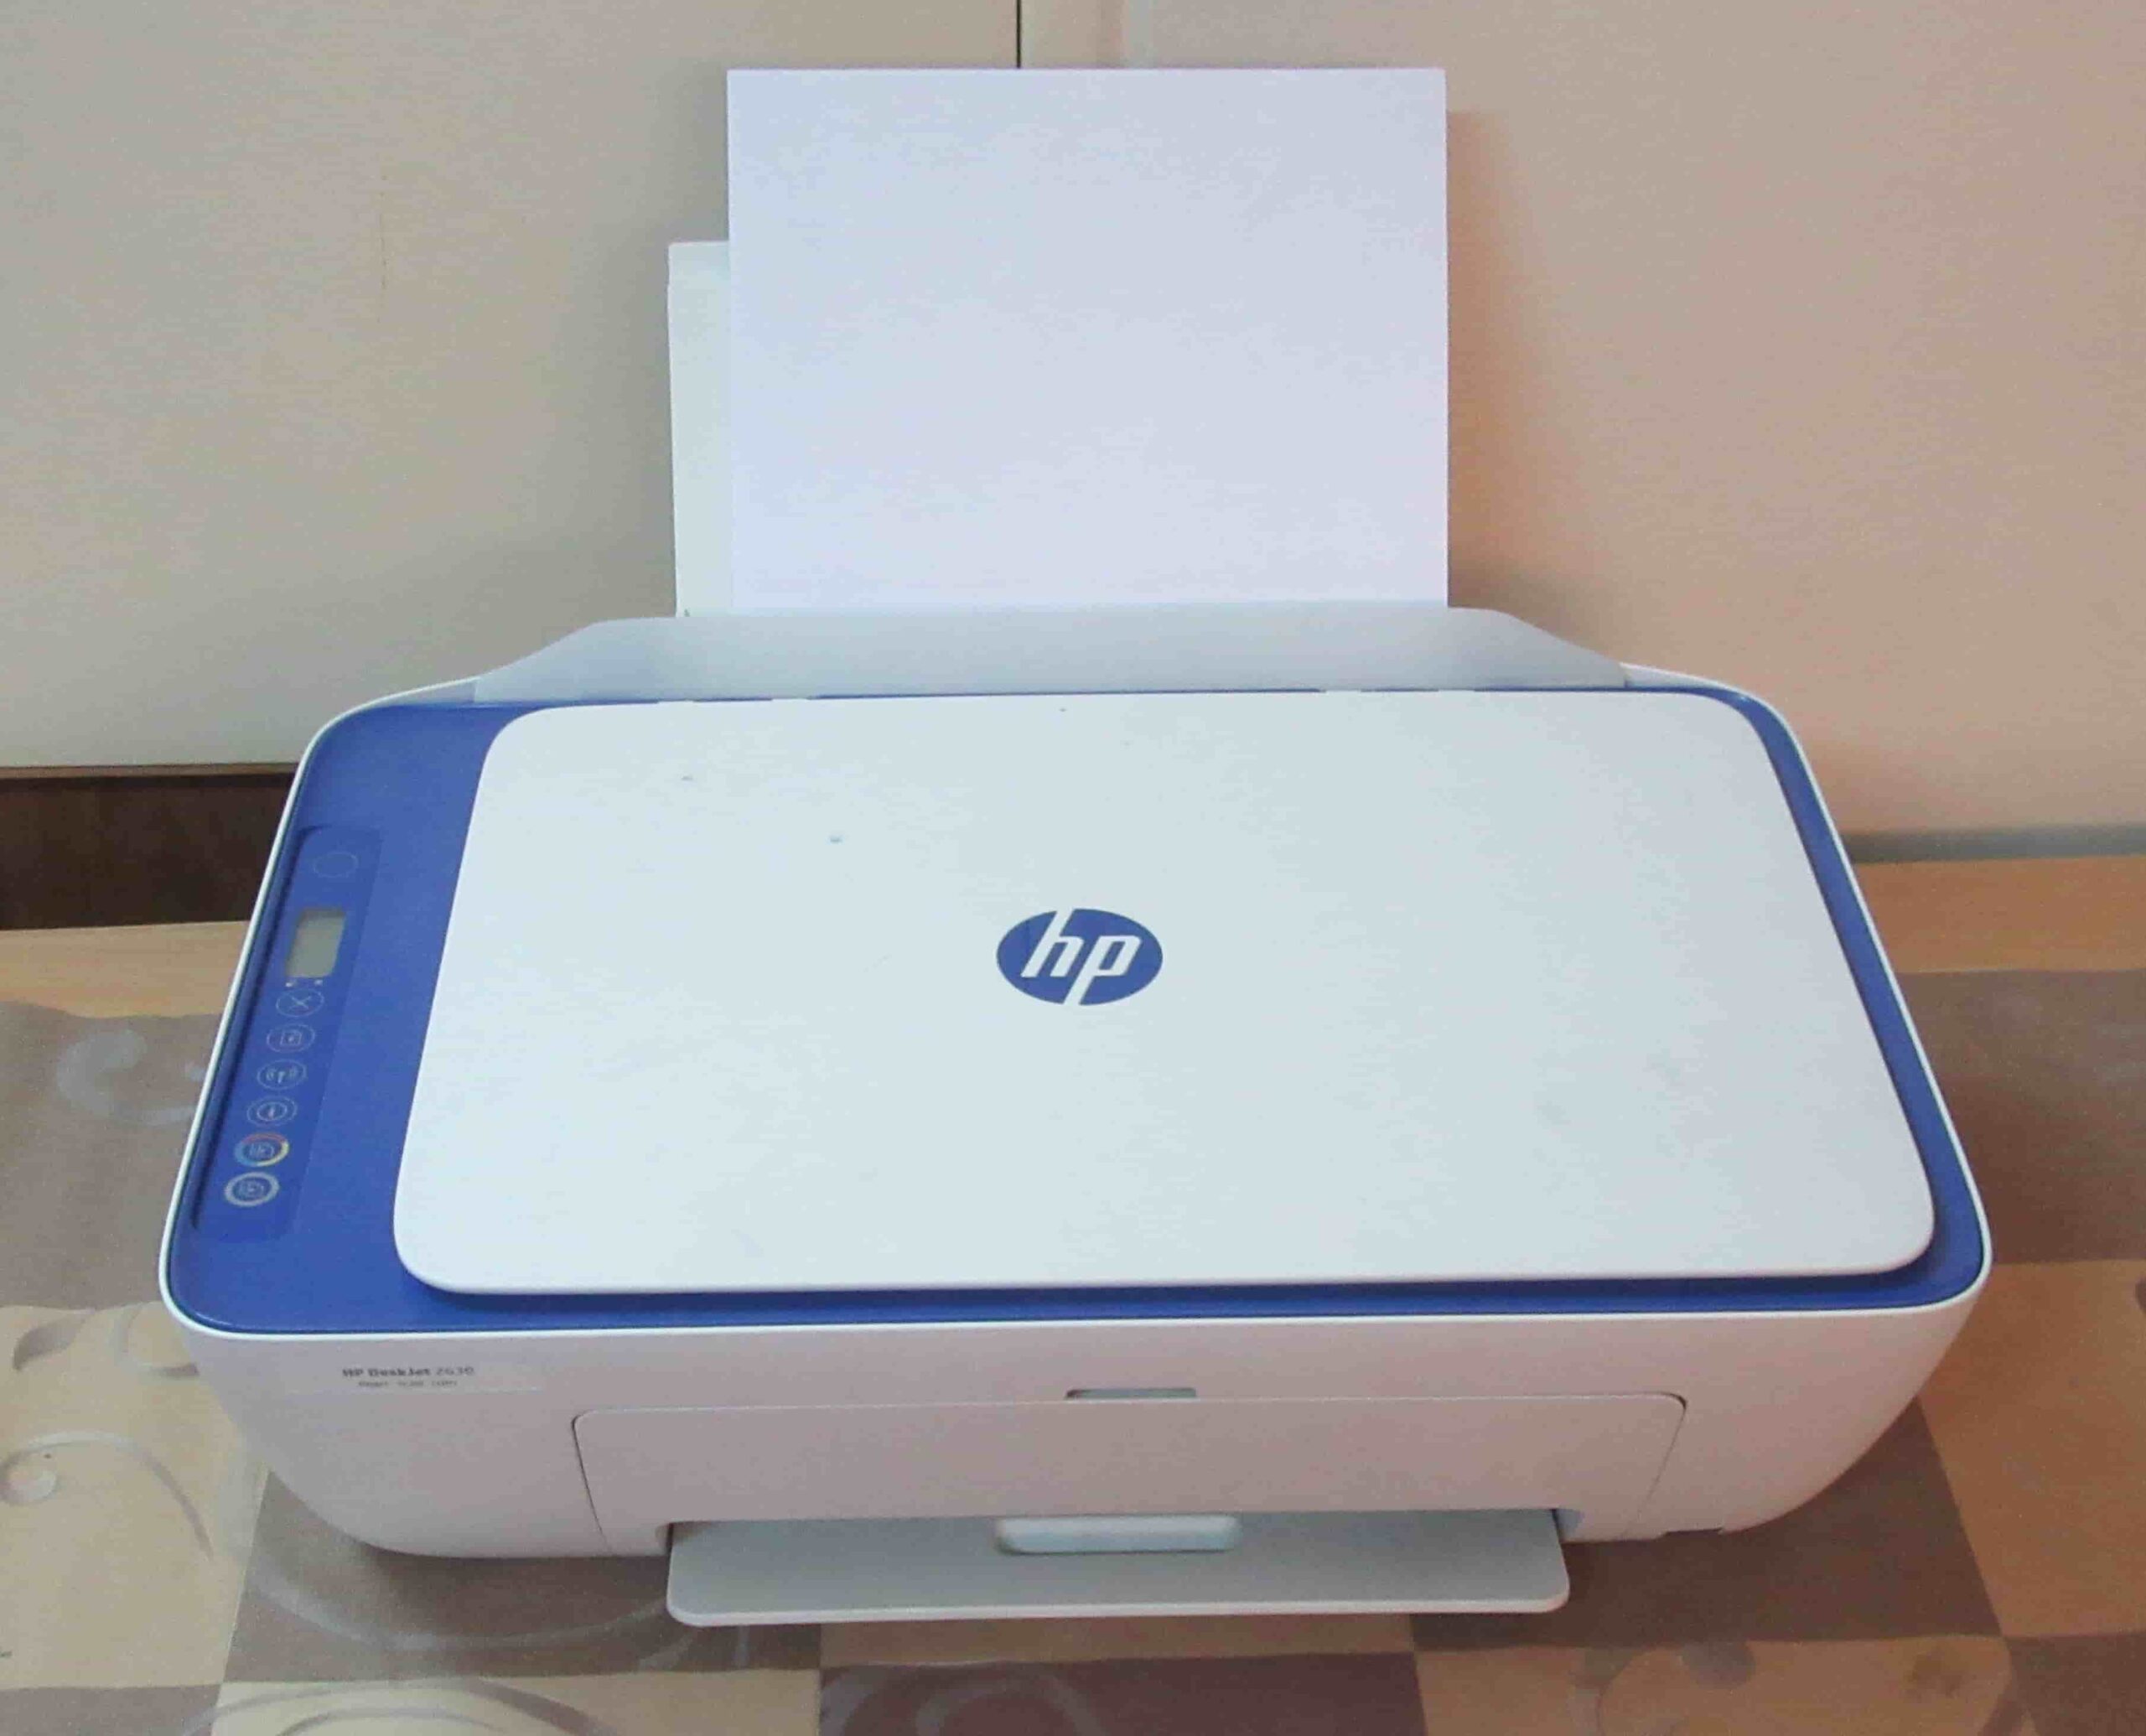 HP_Deskjet_All_in_One_Printer